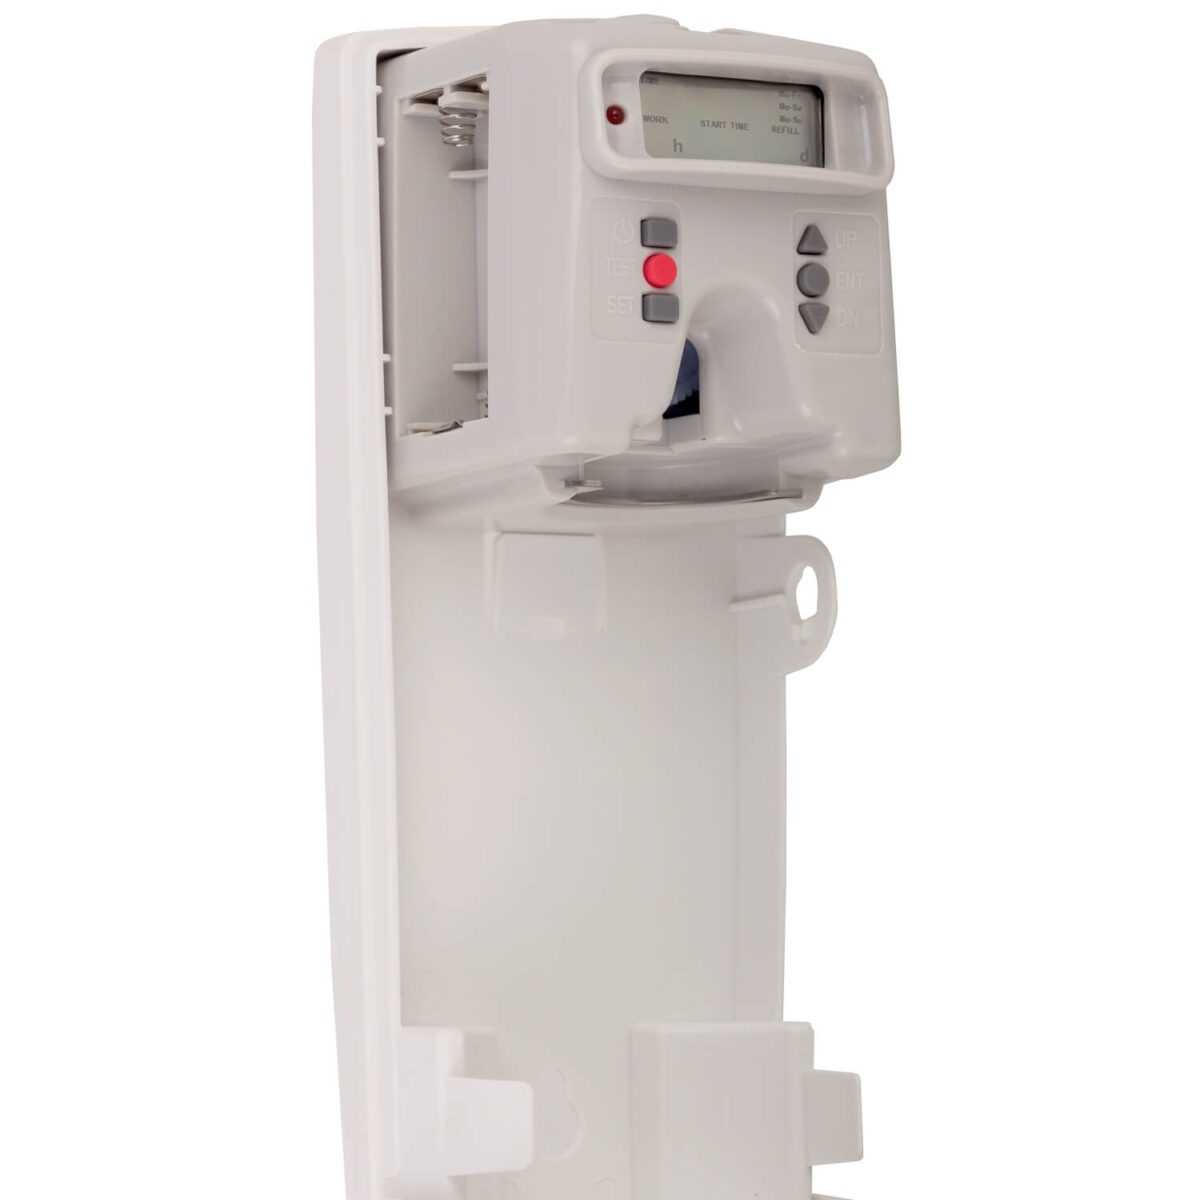 automatic air freshener dispenser digital programmable